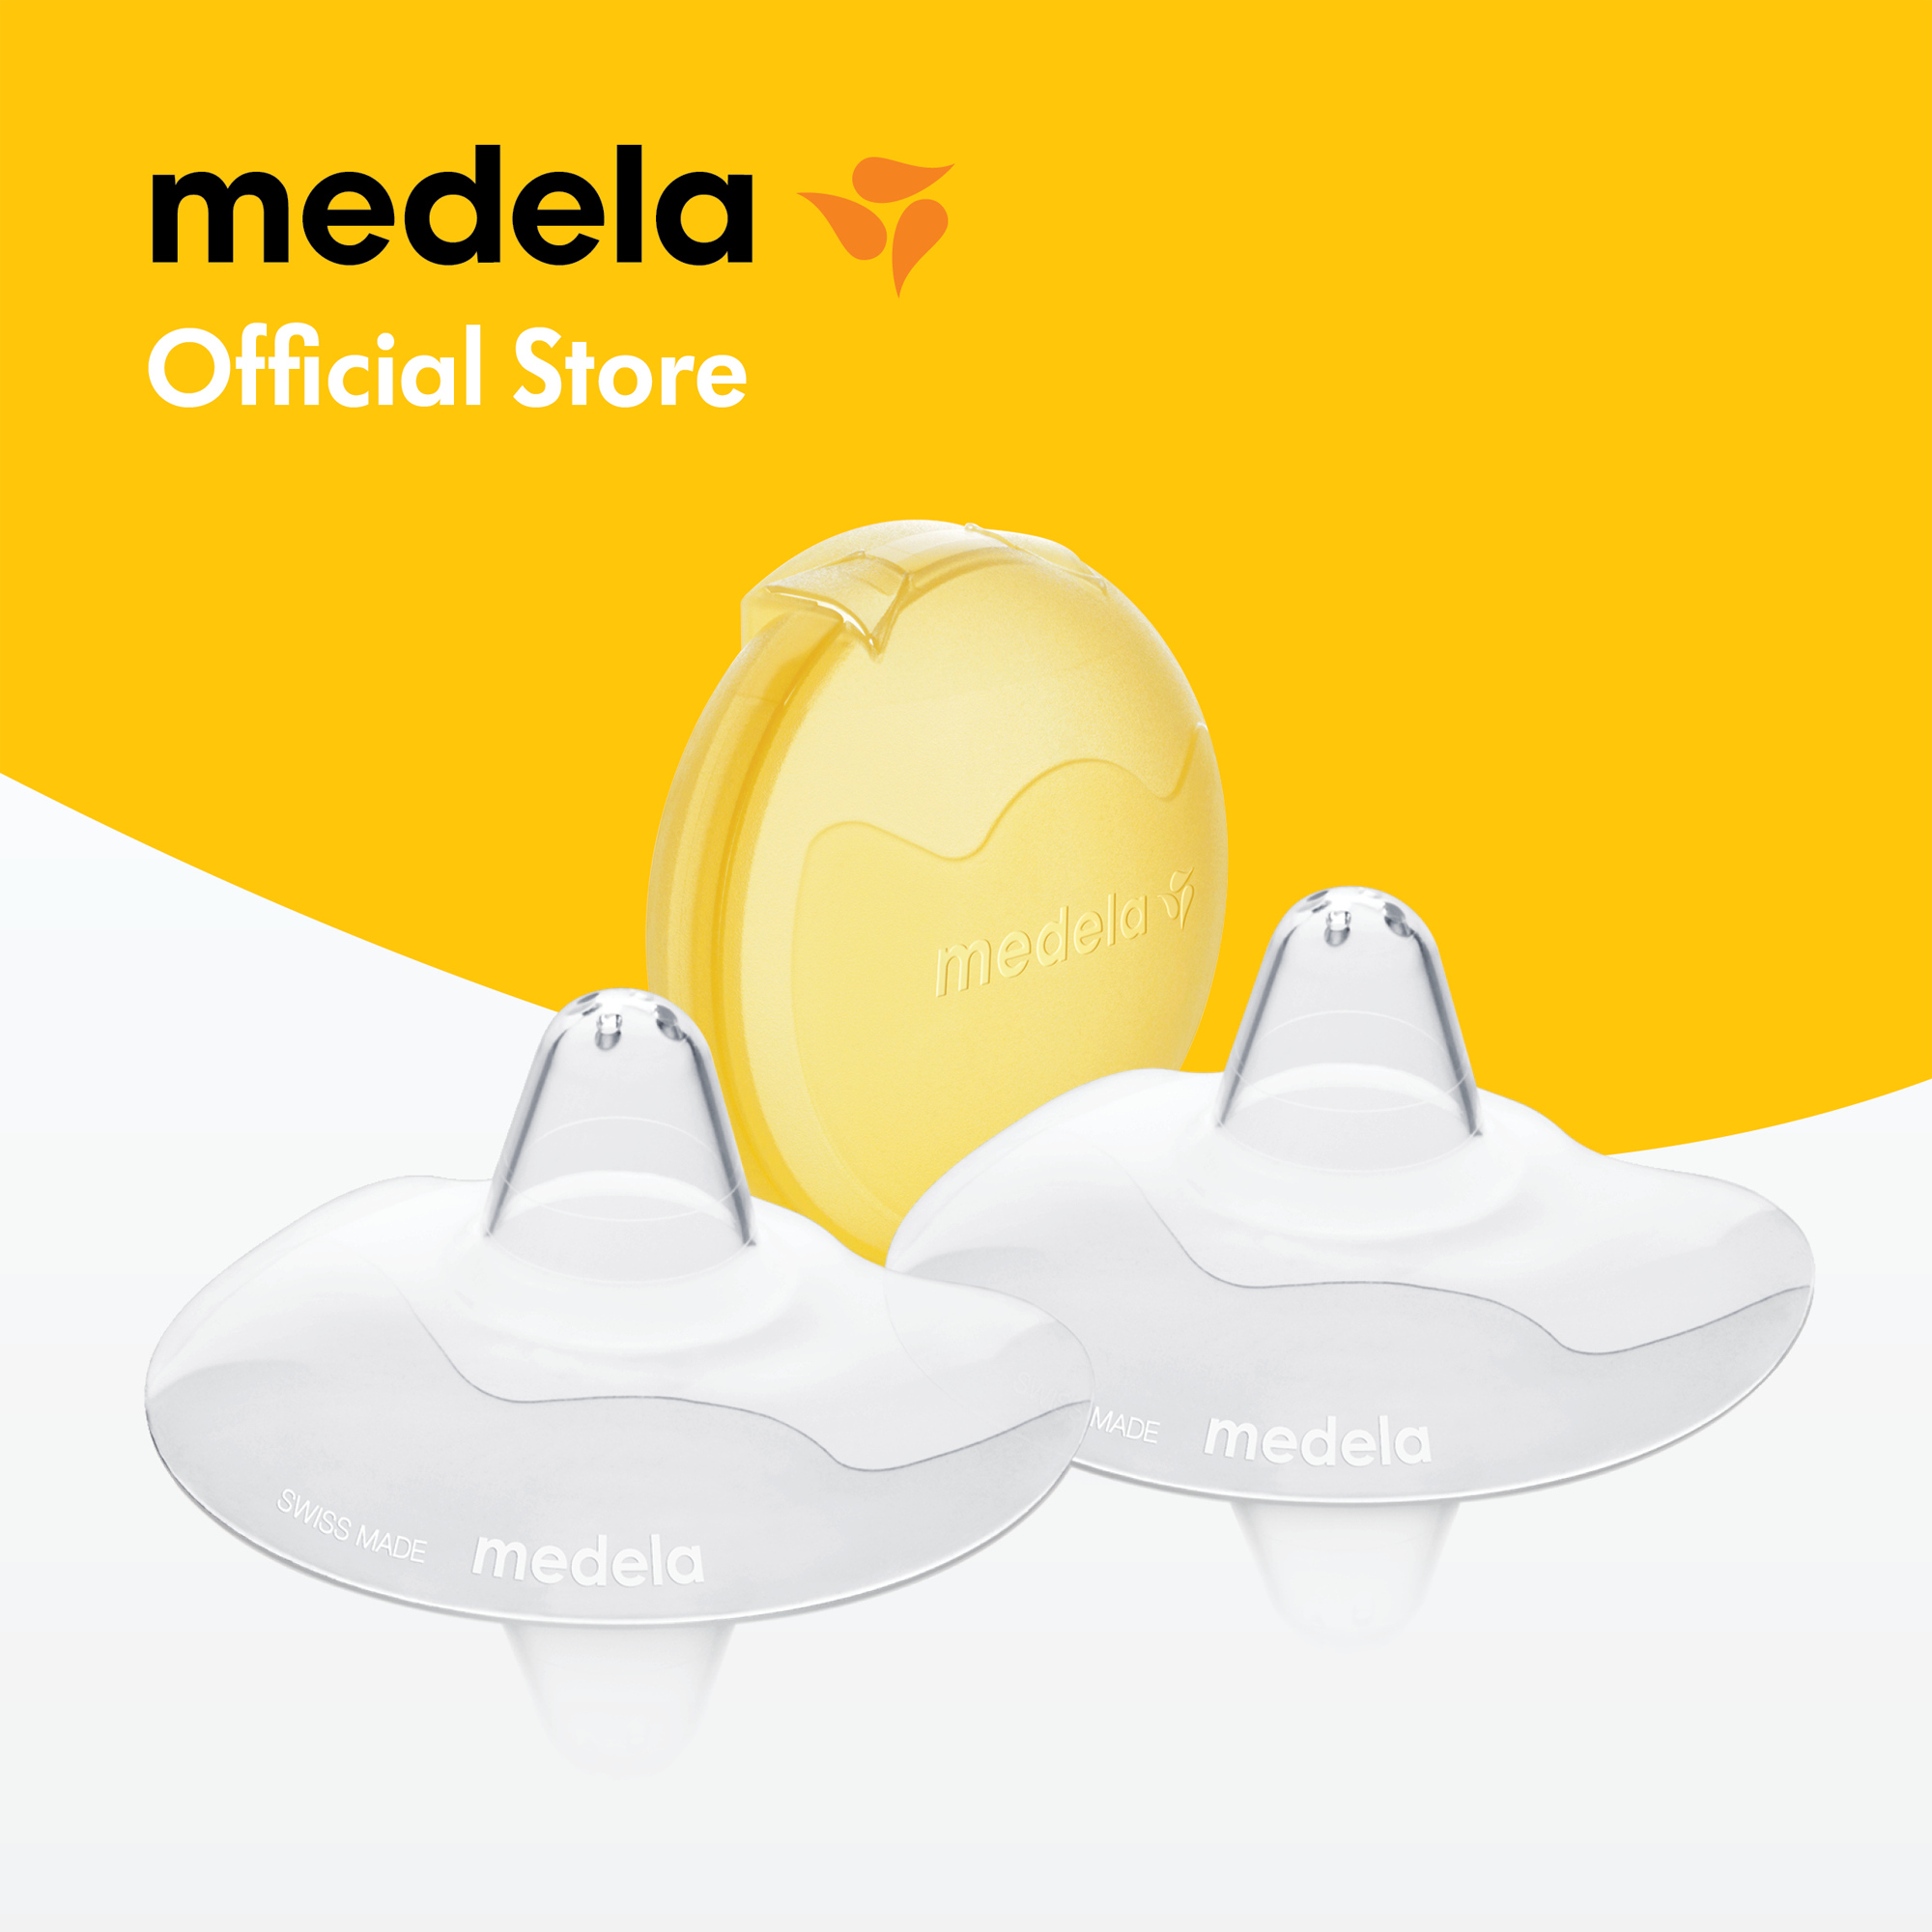 Trợ ti Medela size S, M, L - Hàng phân phối chính thức Medela Thụy Sĩ